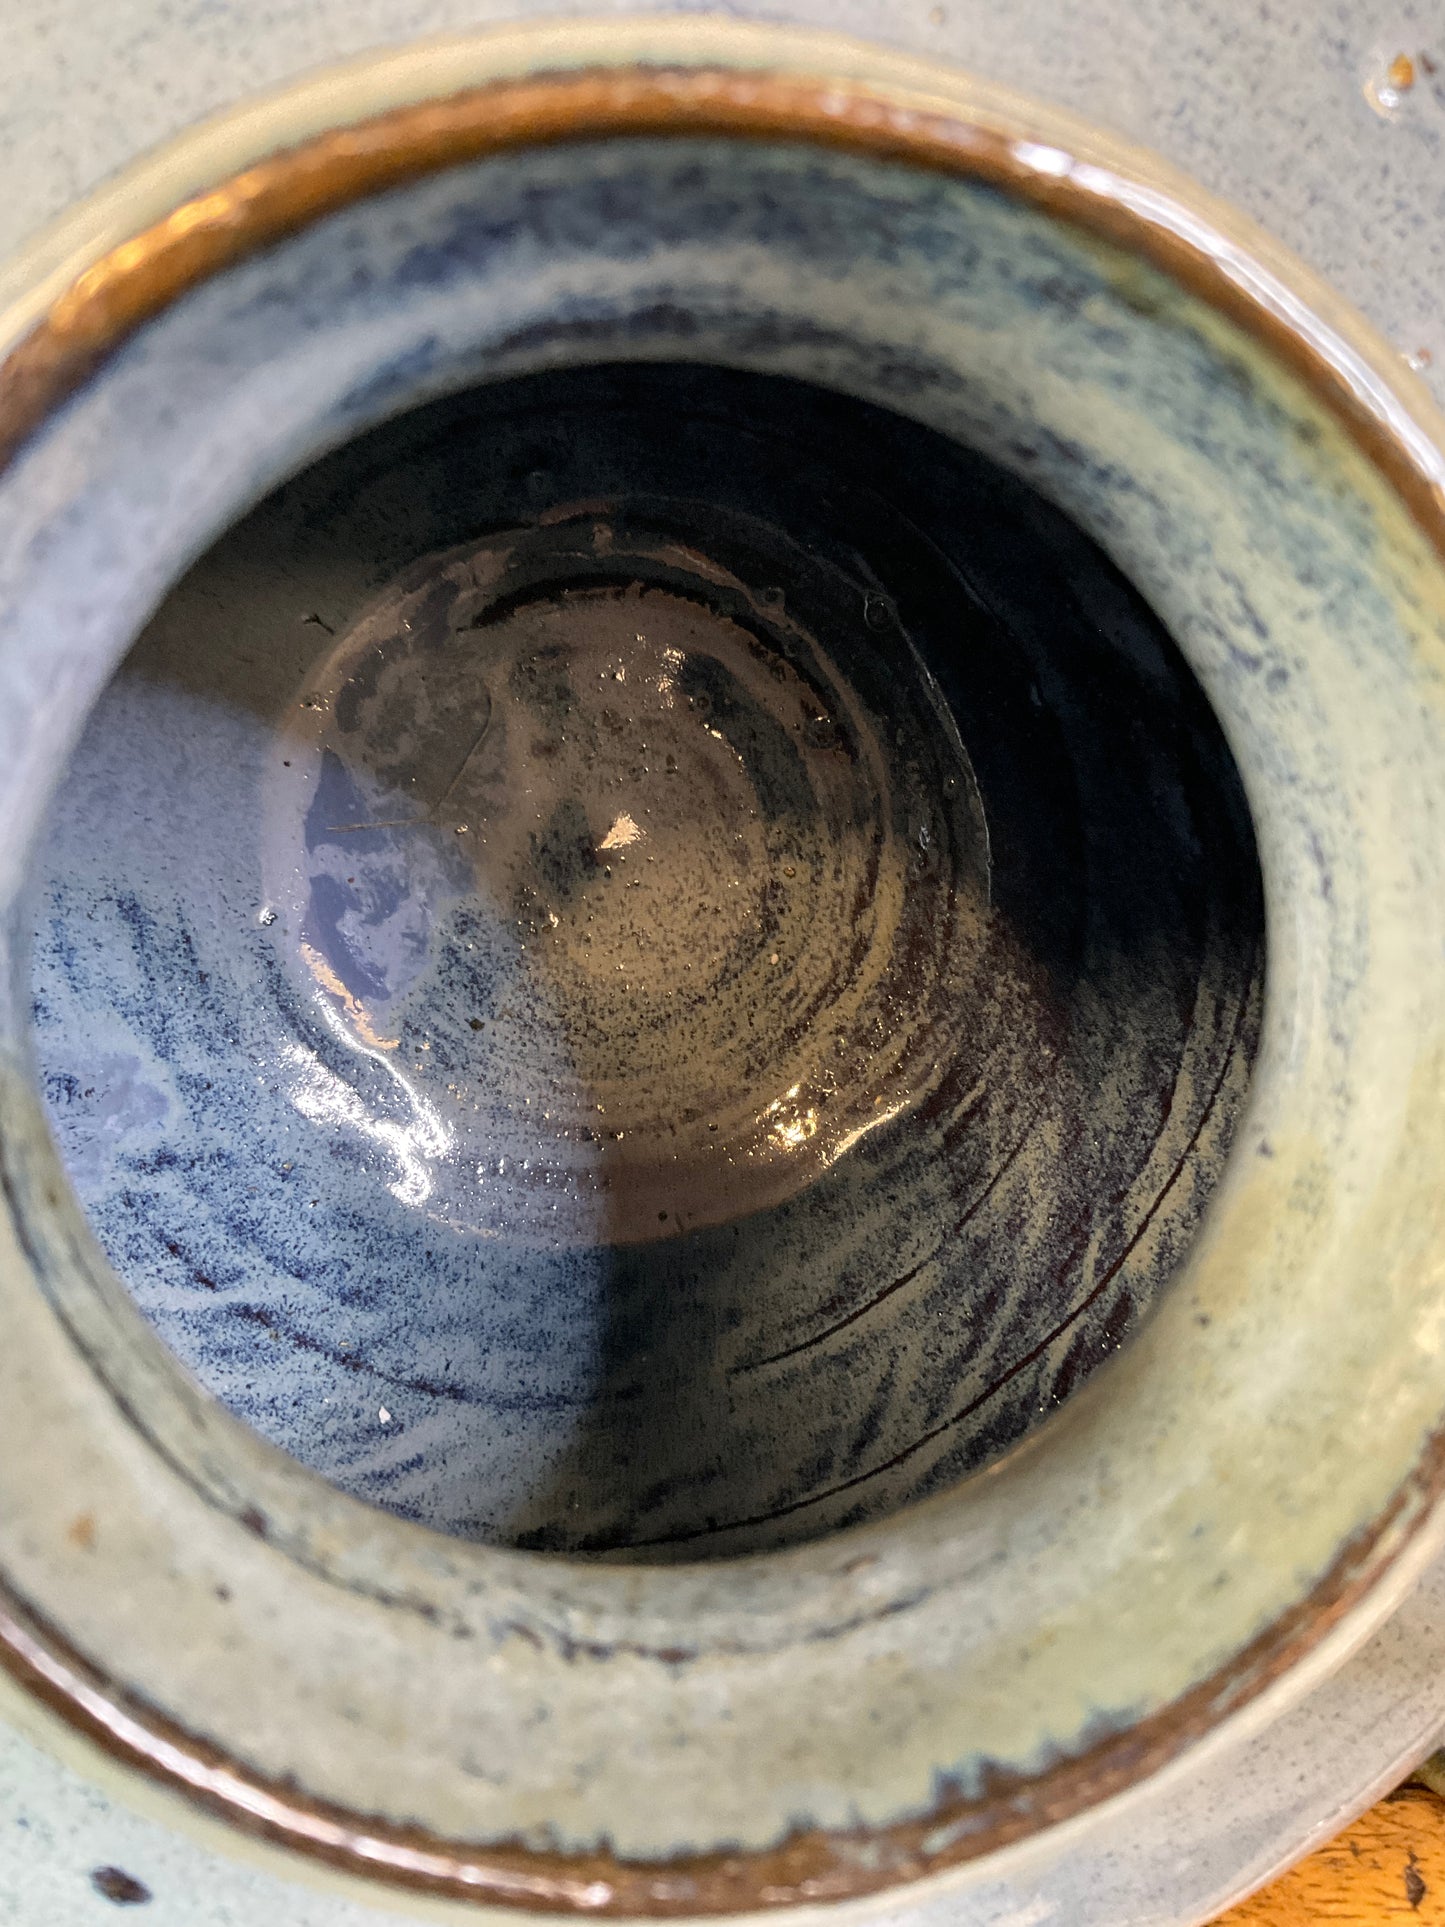 Glazed Pottery Teapot, Multicolored